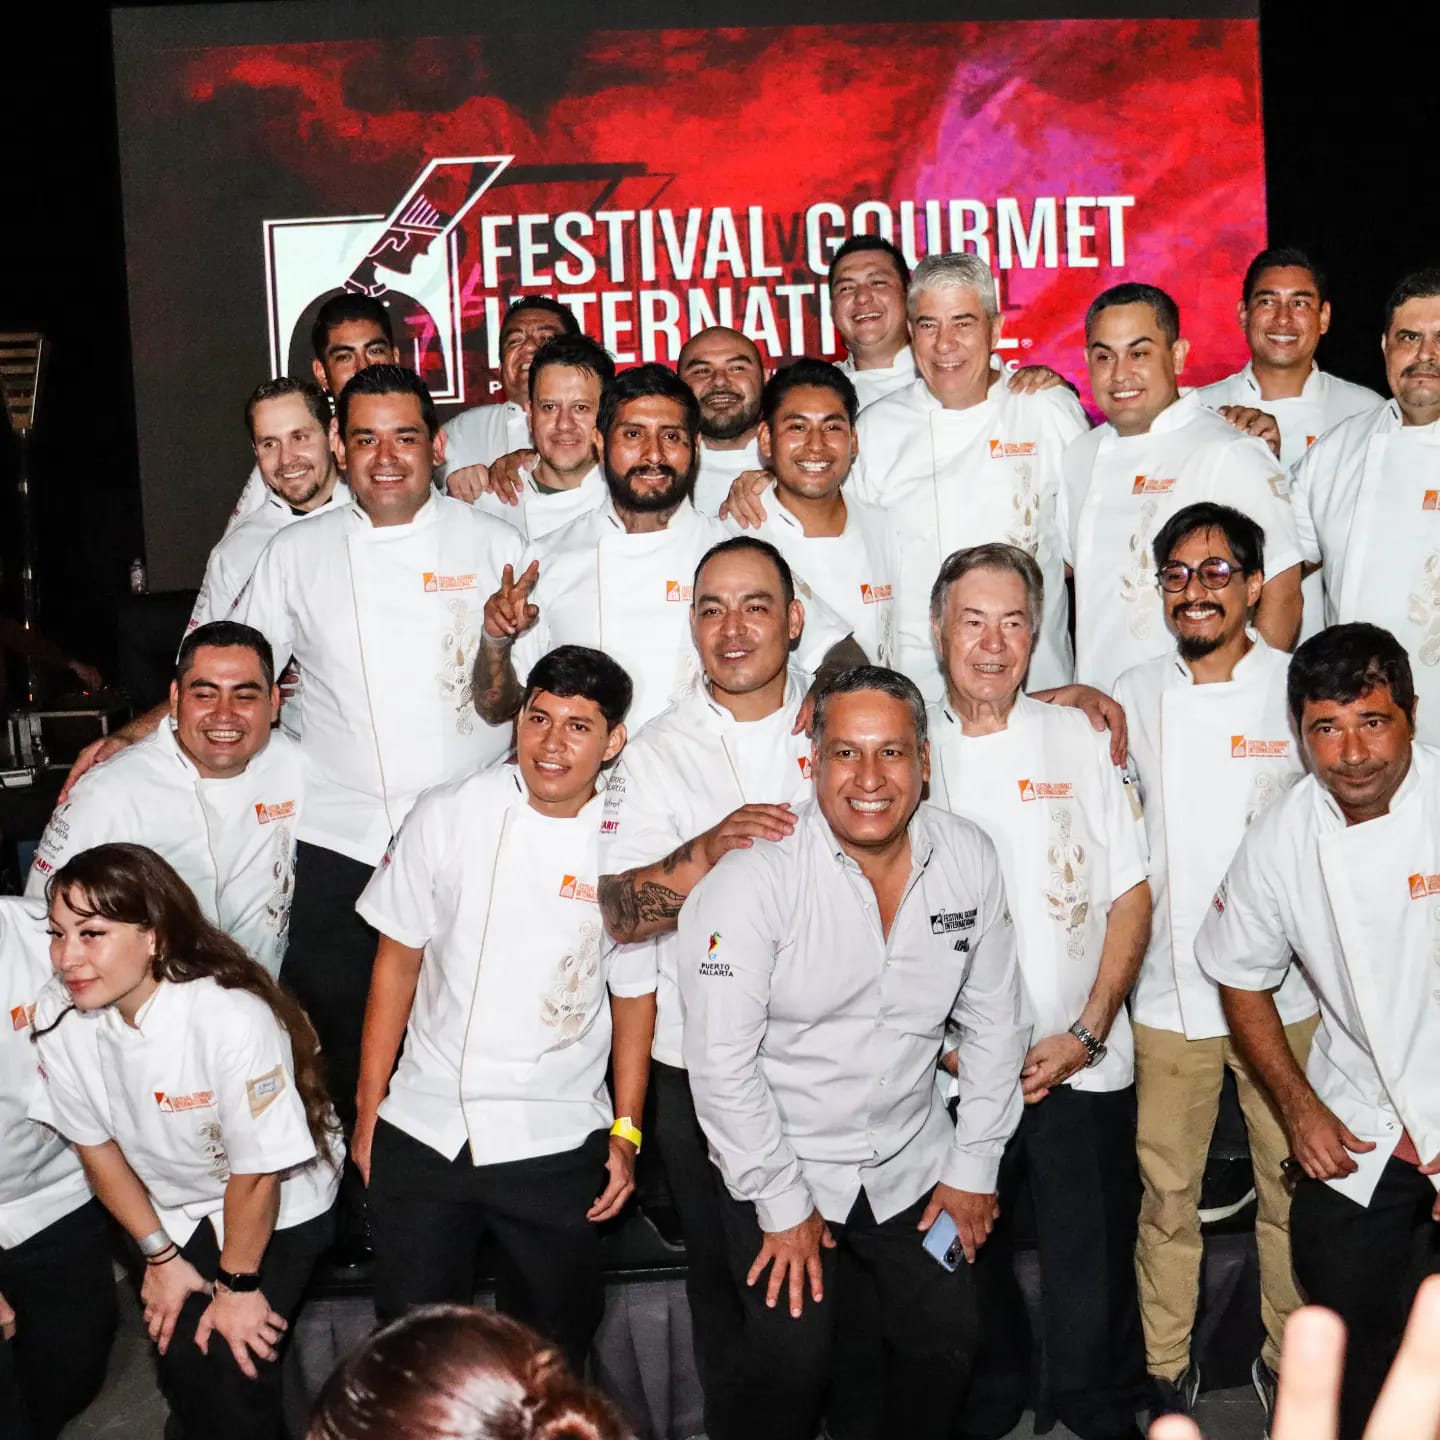 festival gourmet internacional en puerto vallarta